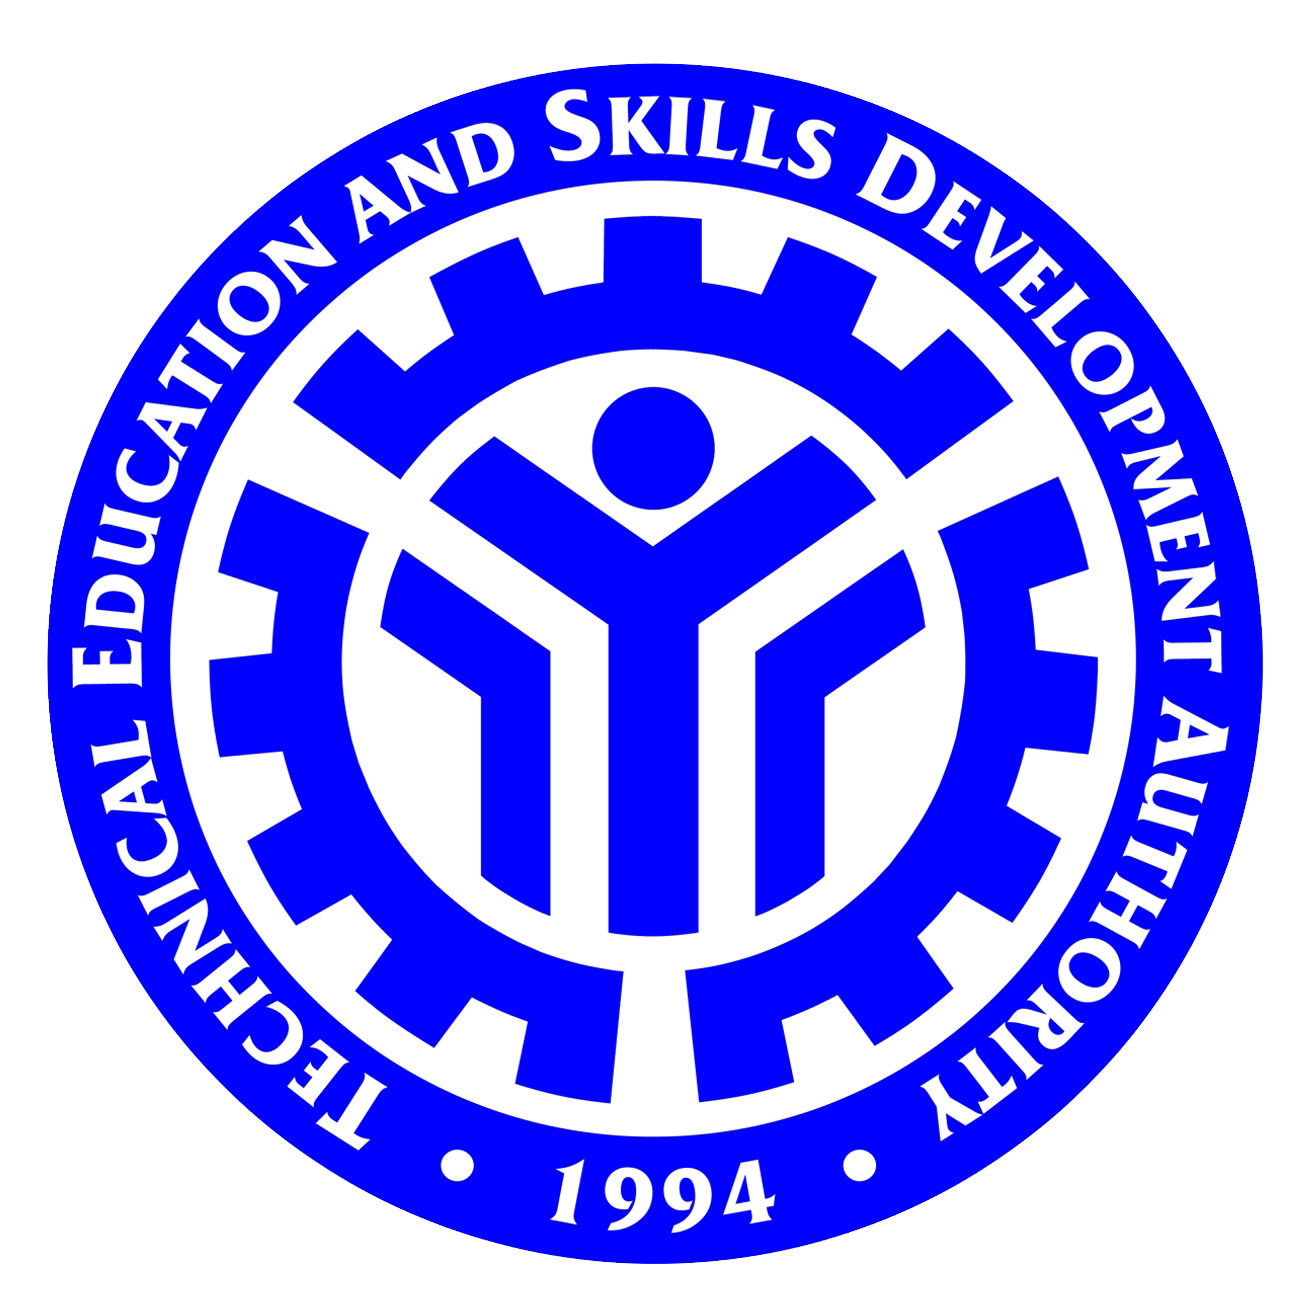 Tesda – Technical Education And Skills Development Authority